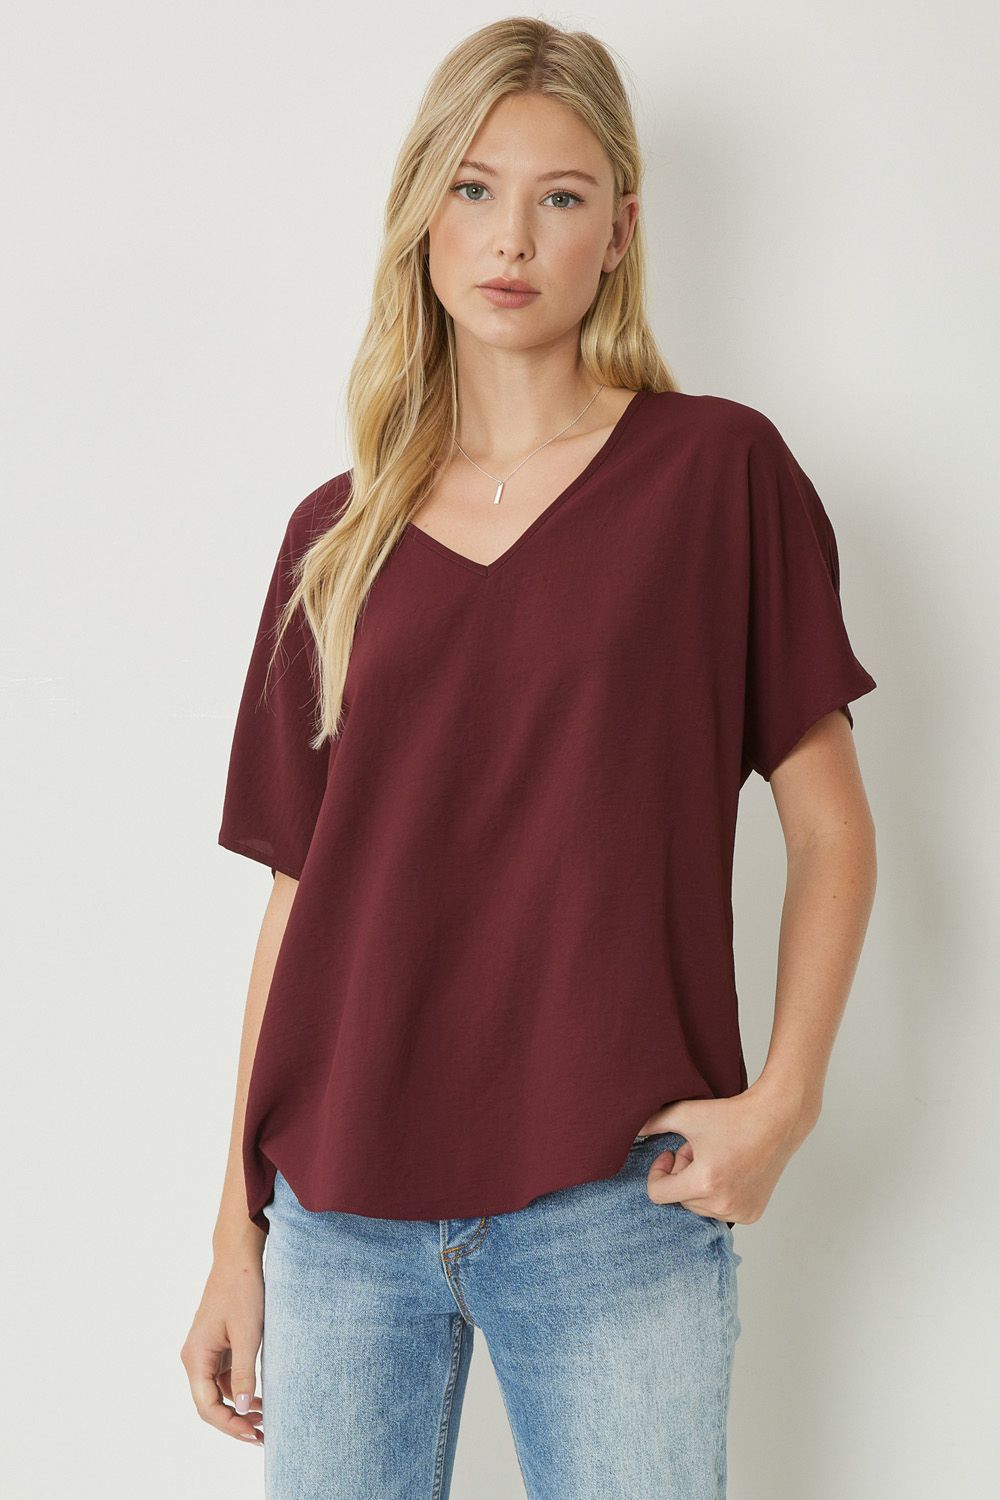 Women's burgundy basic v-neck shirt.